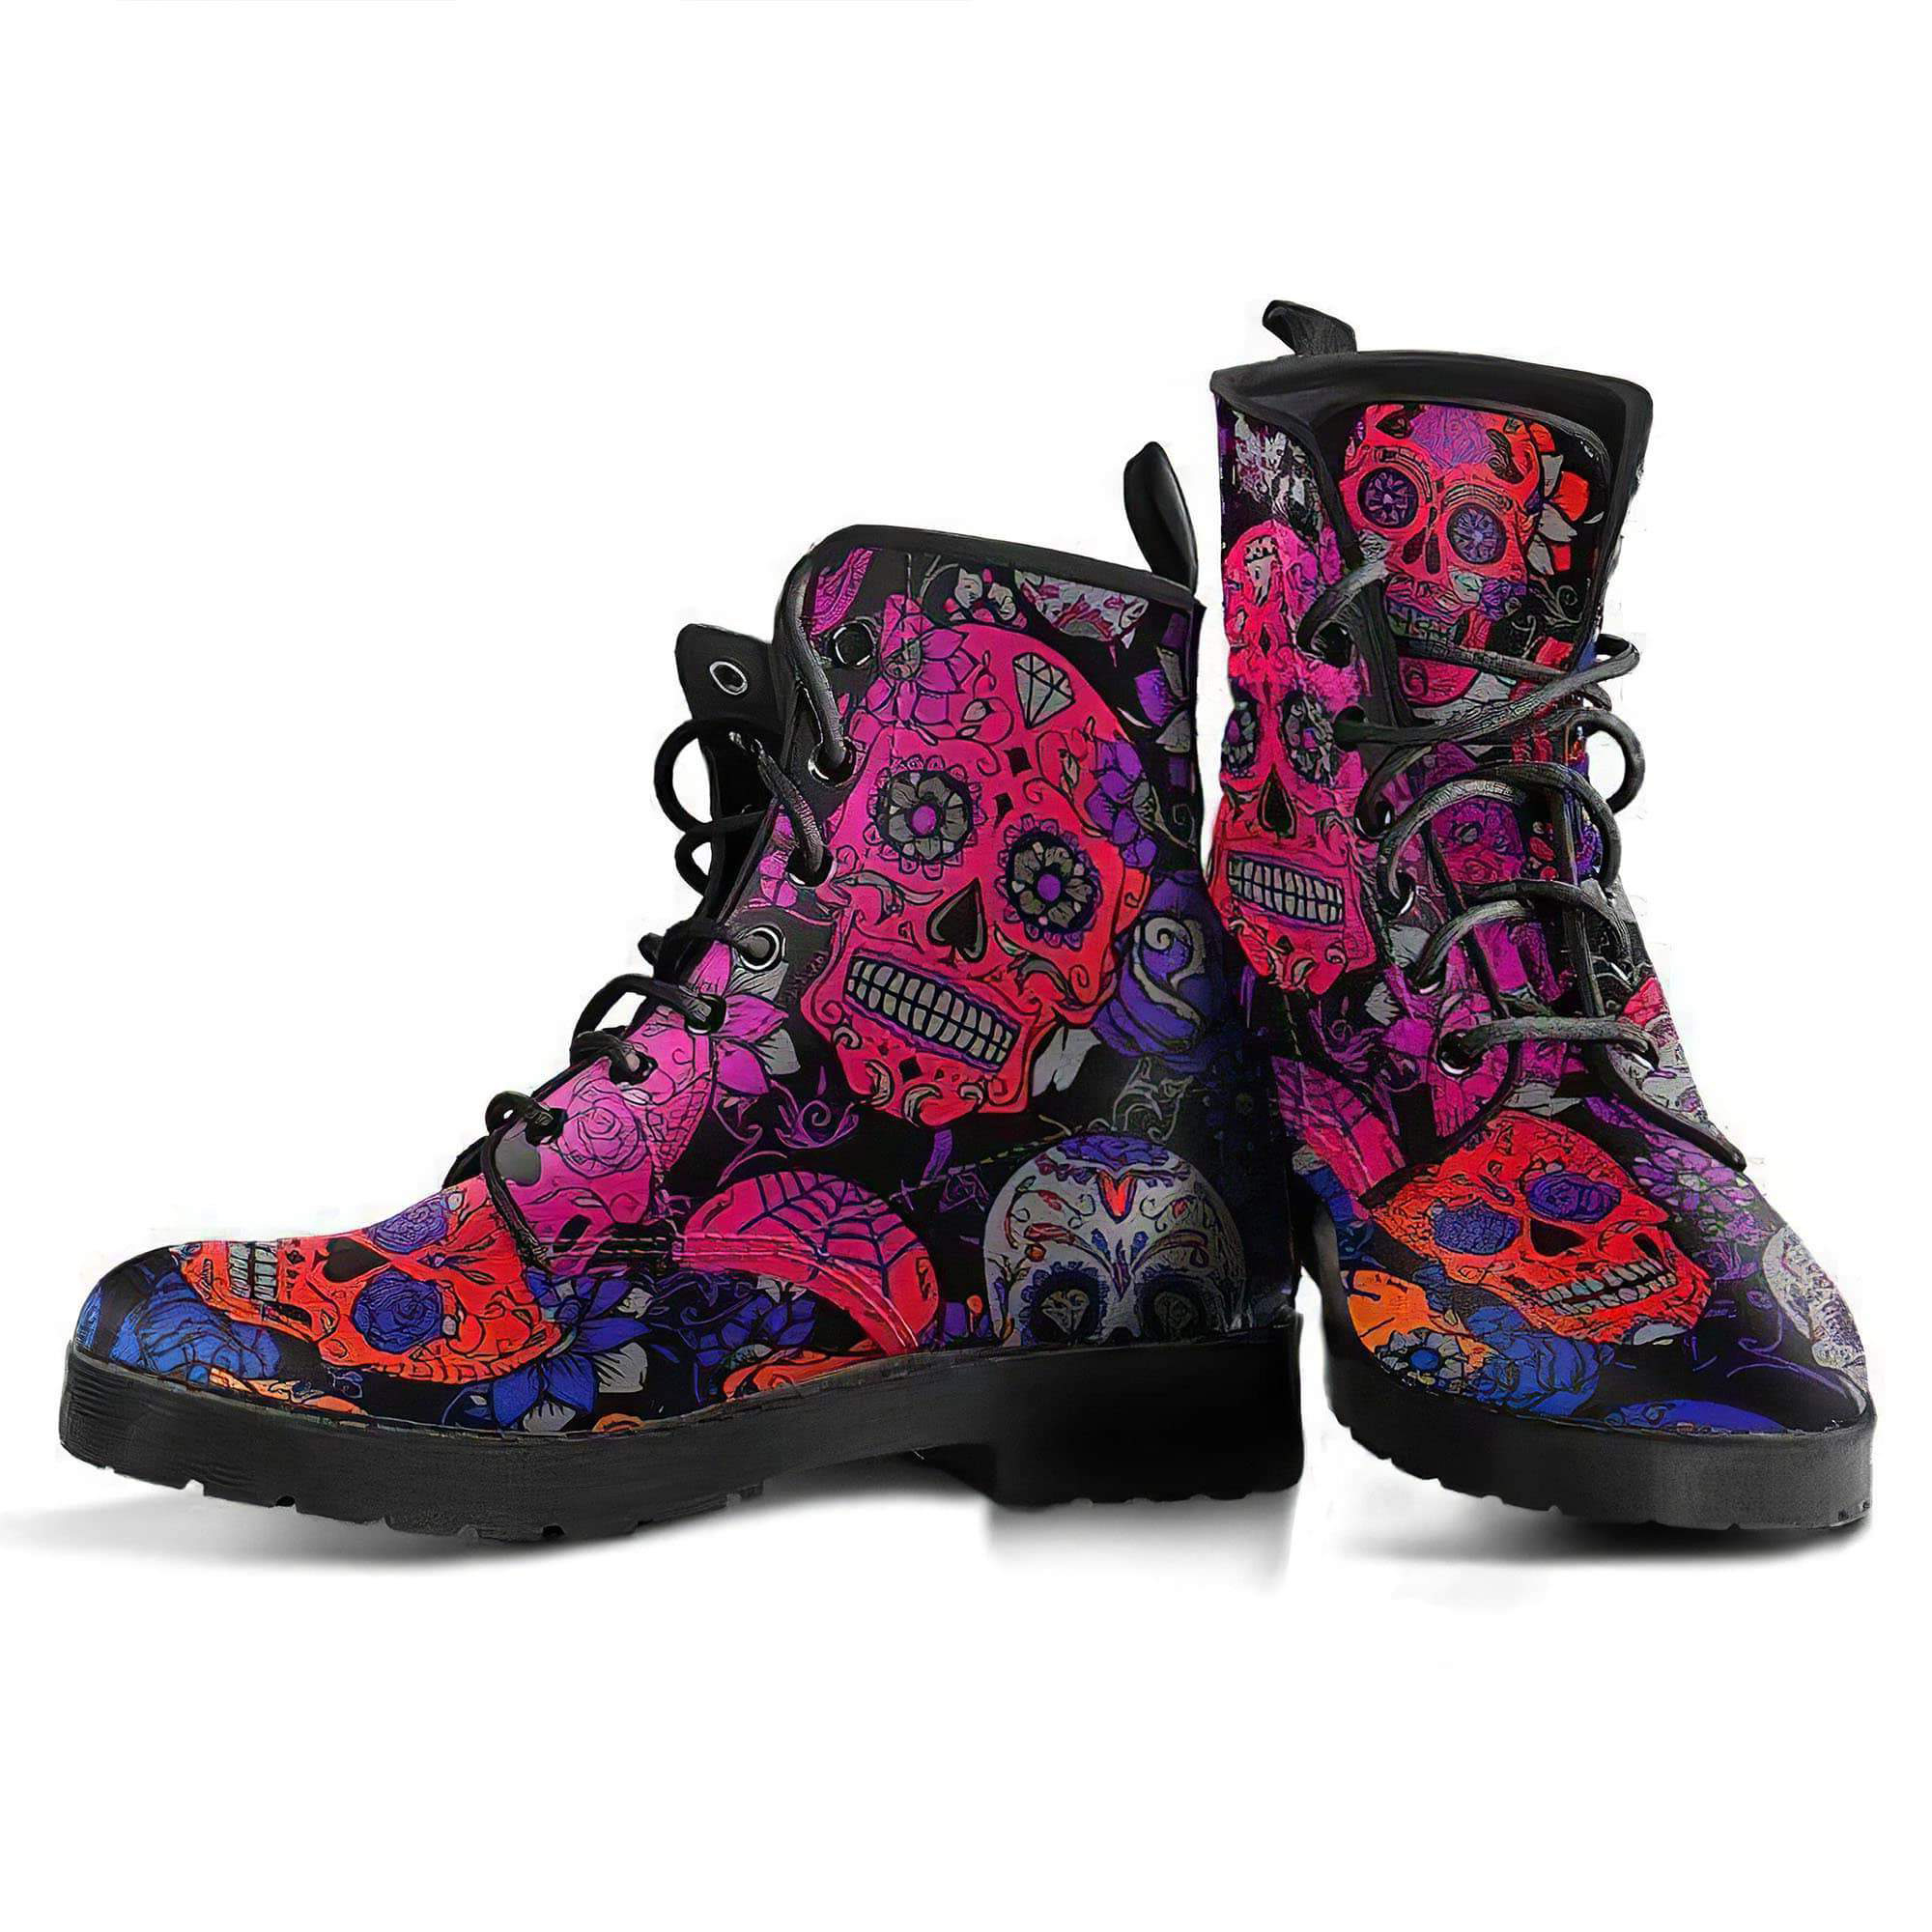 rainbow-sugar-skull-women-s-boots-vegan-friendly-leather-women-s-leather-boots-12051942211645.jpg